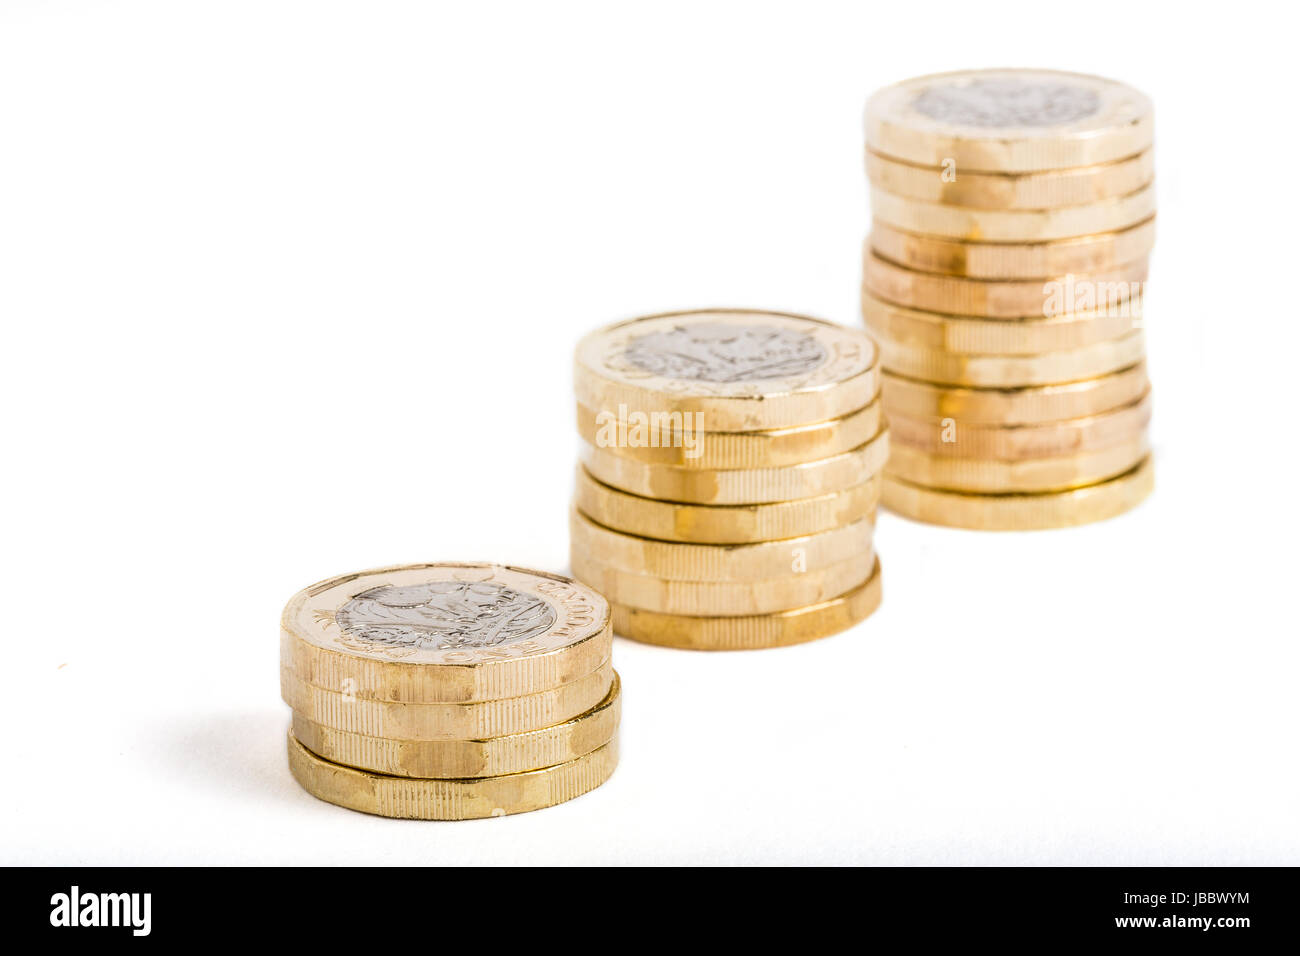 British one pound coins on white background Stock Photo